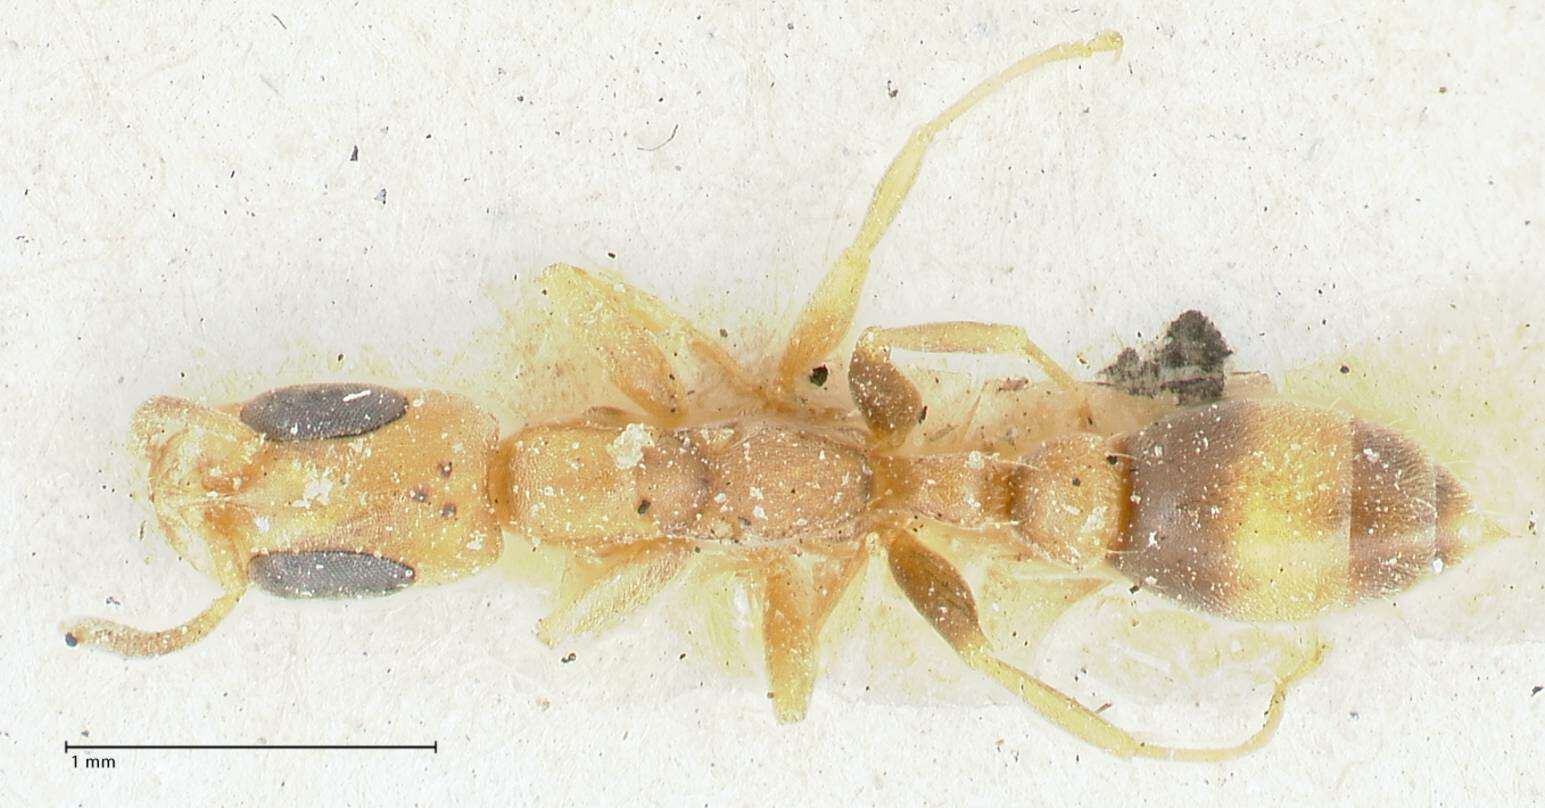 Image of Pseudomyrmex subtilissimus (Emery 1890)